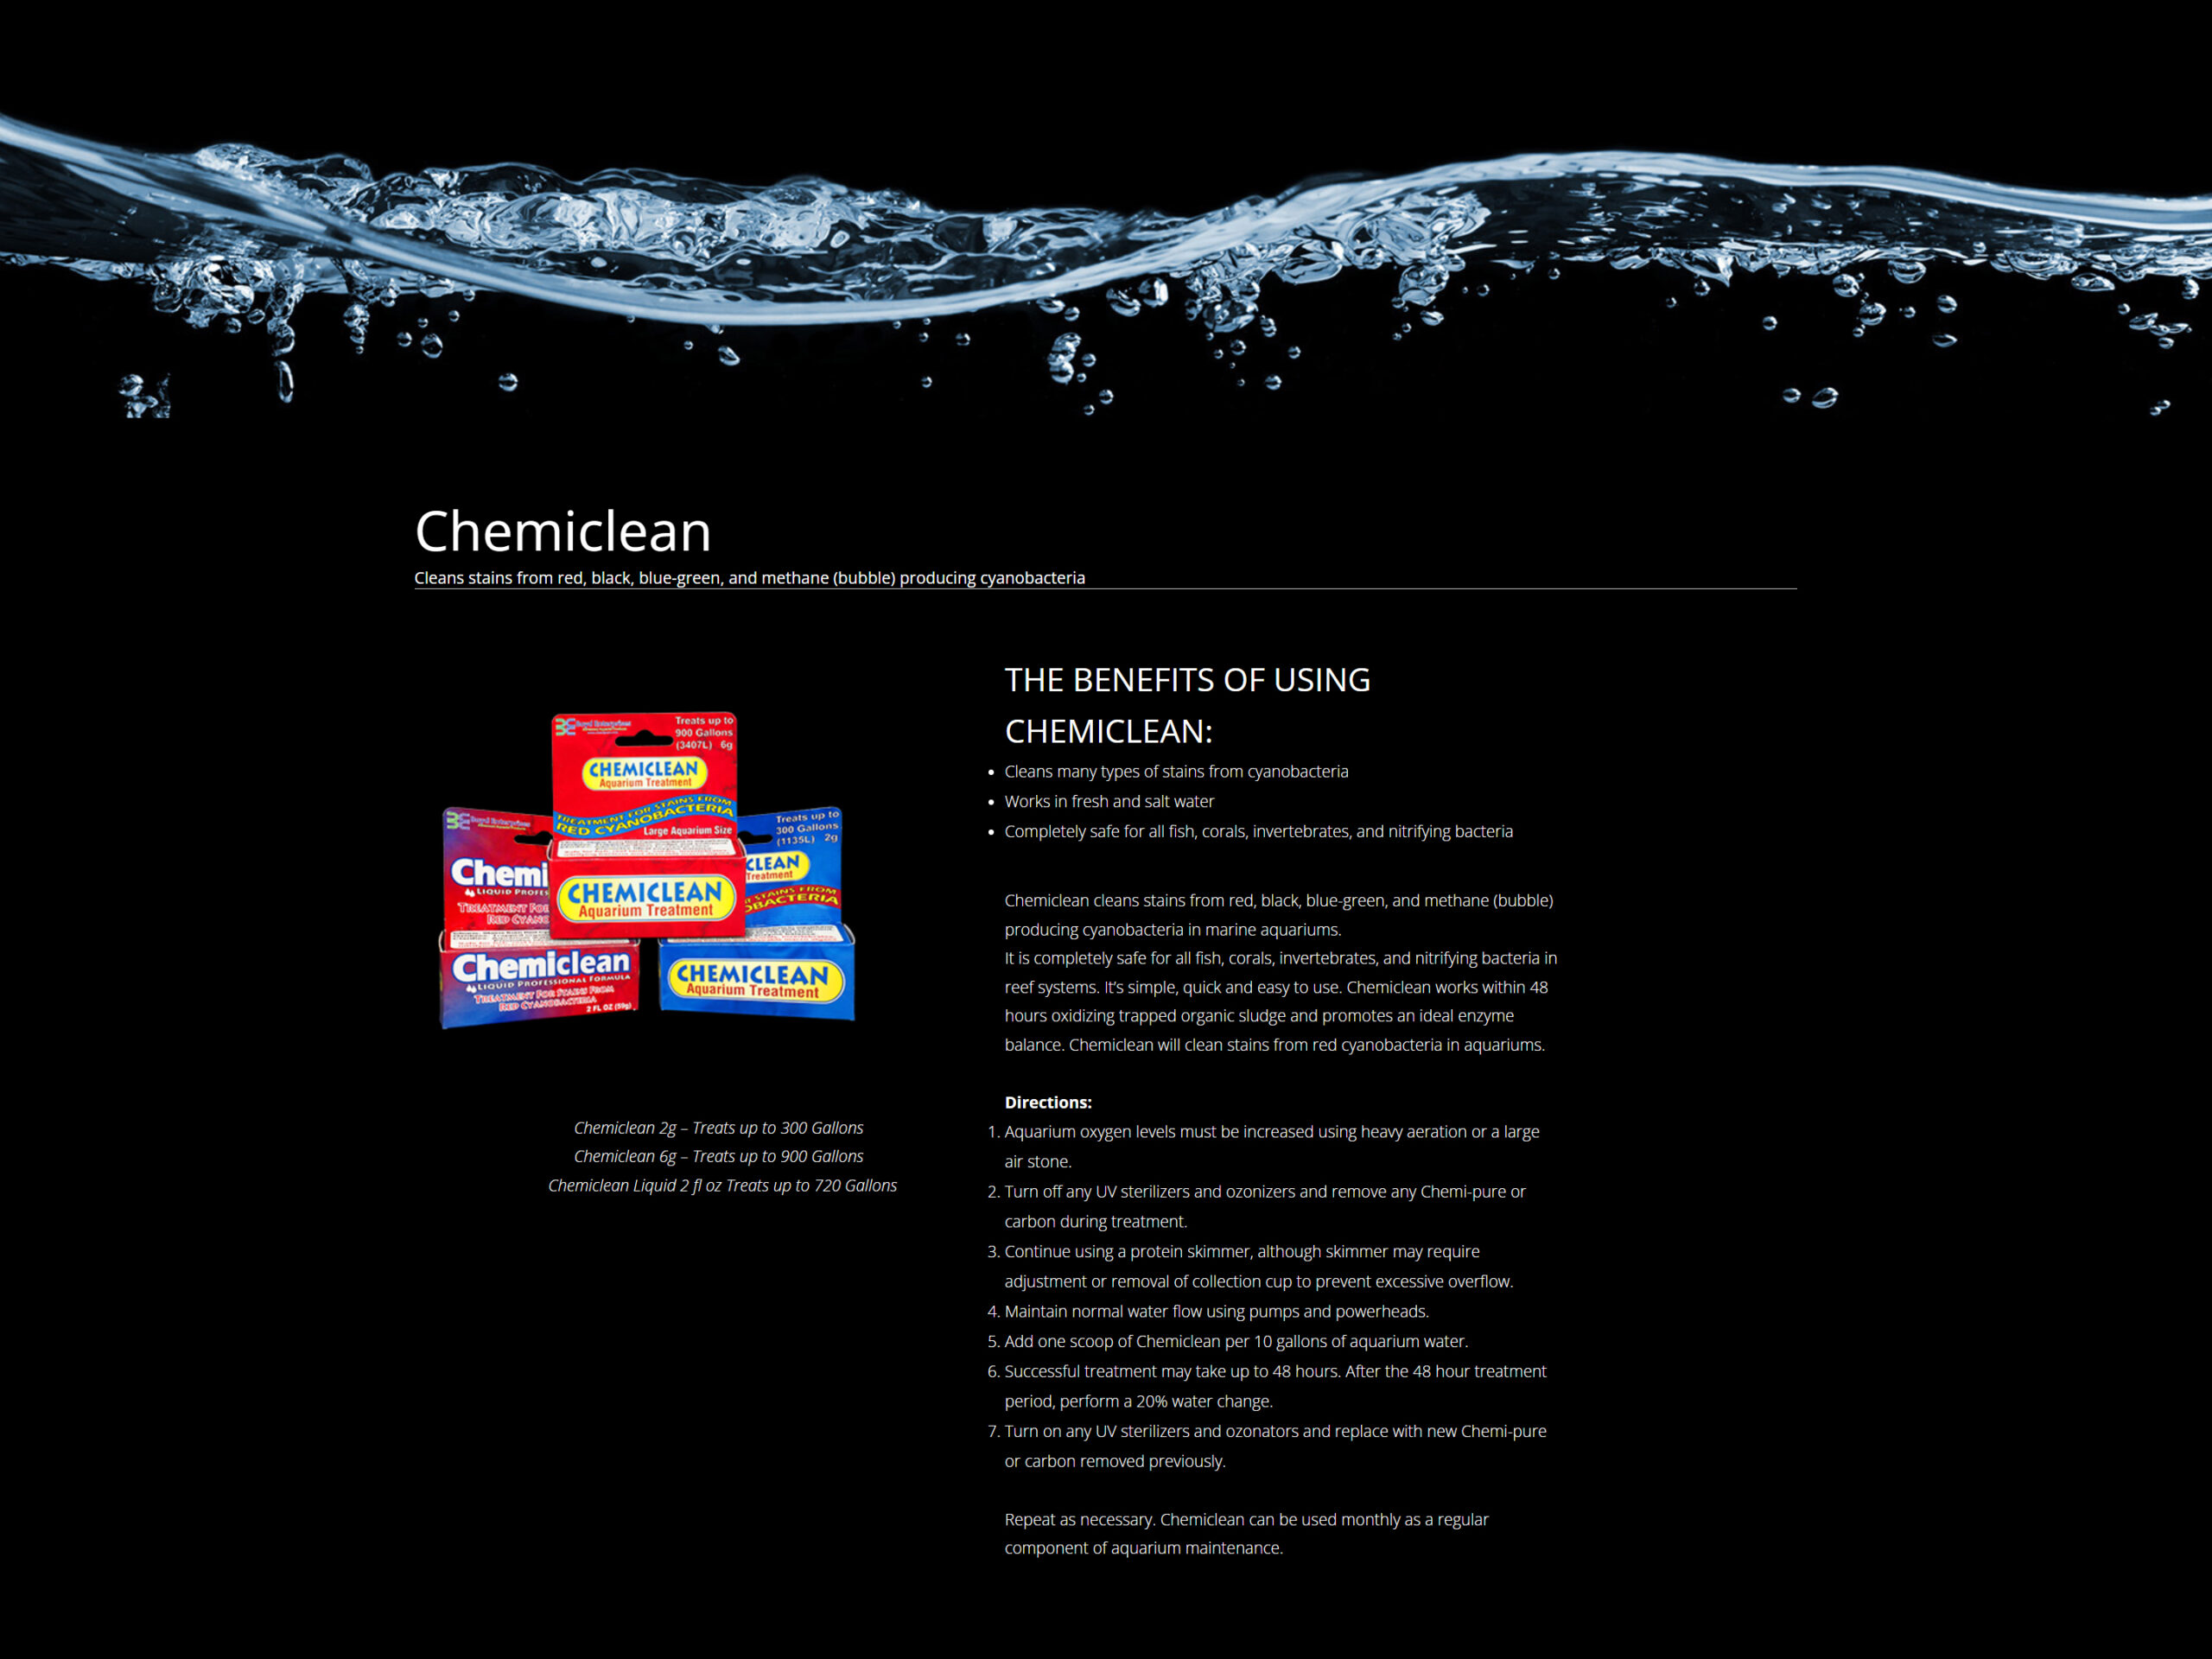 Chemiclean scaled